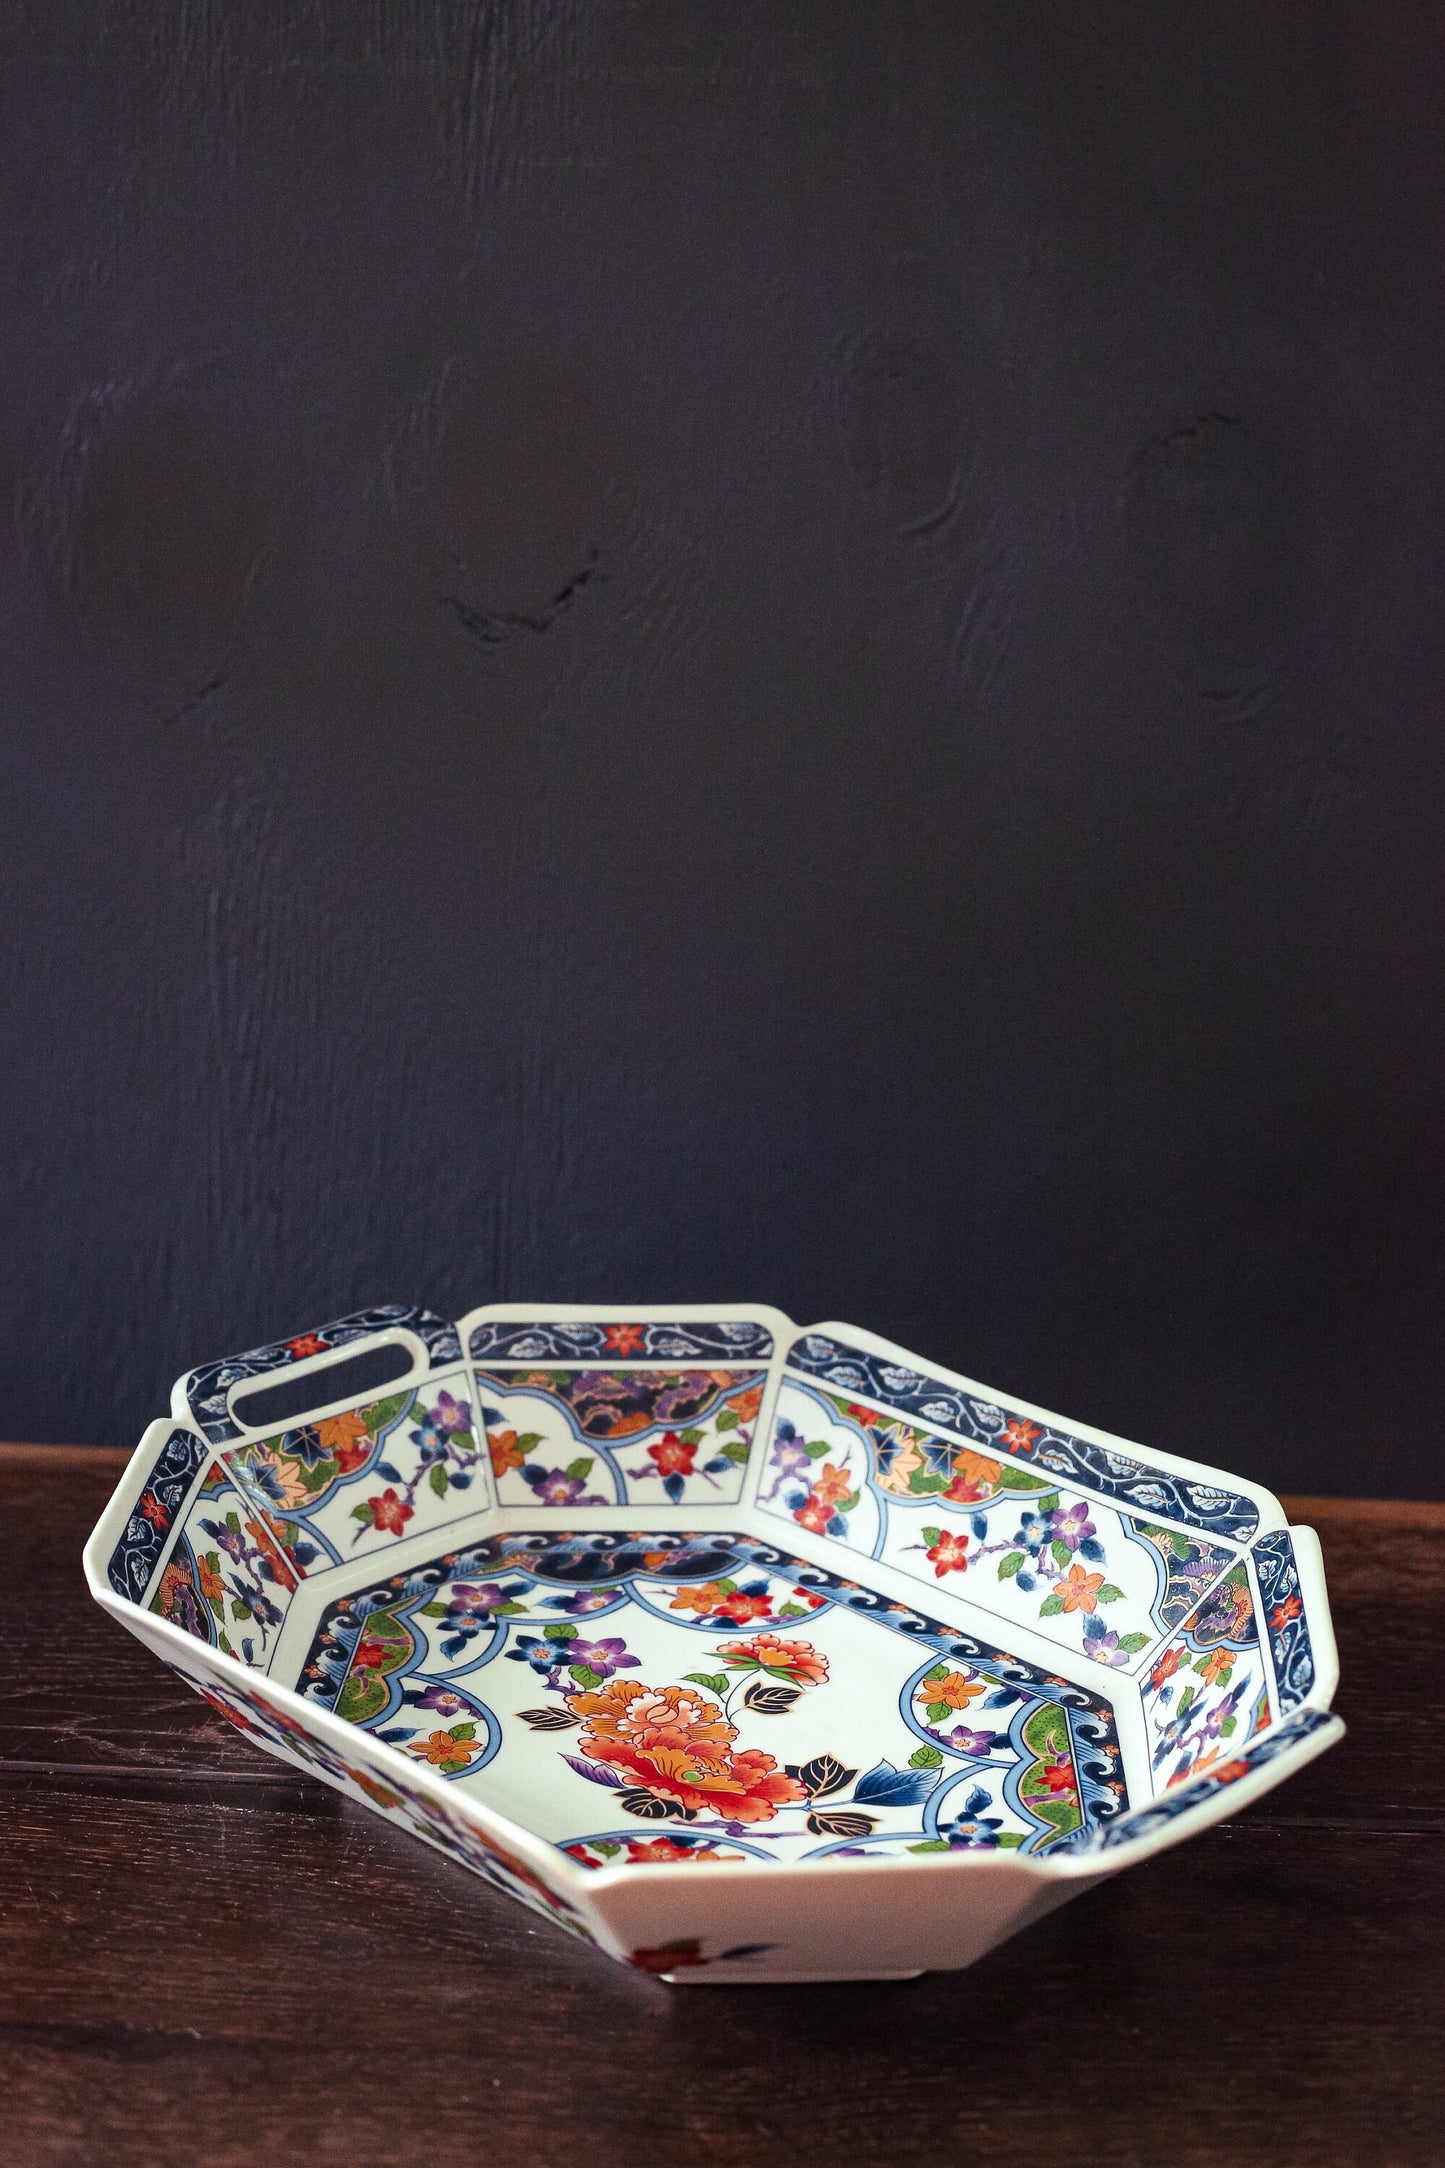 Colorful Japanese Porcelain Bowl - Vintage Imari Arita Porcelain in Pattern by Eiwa Kinsei